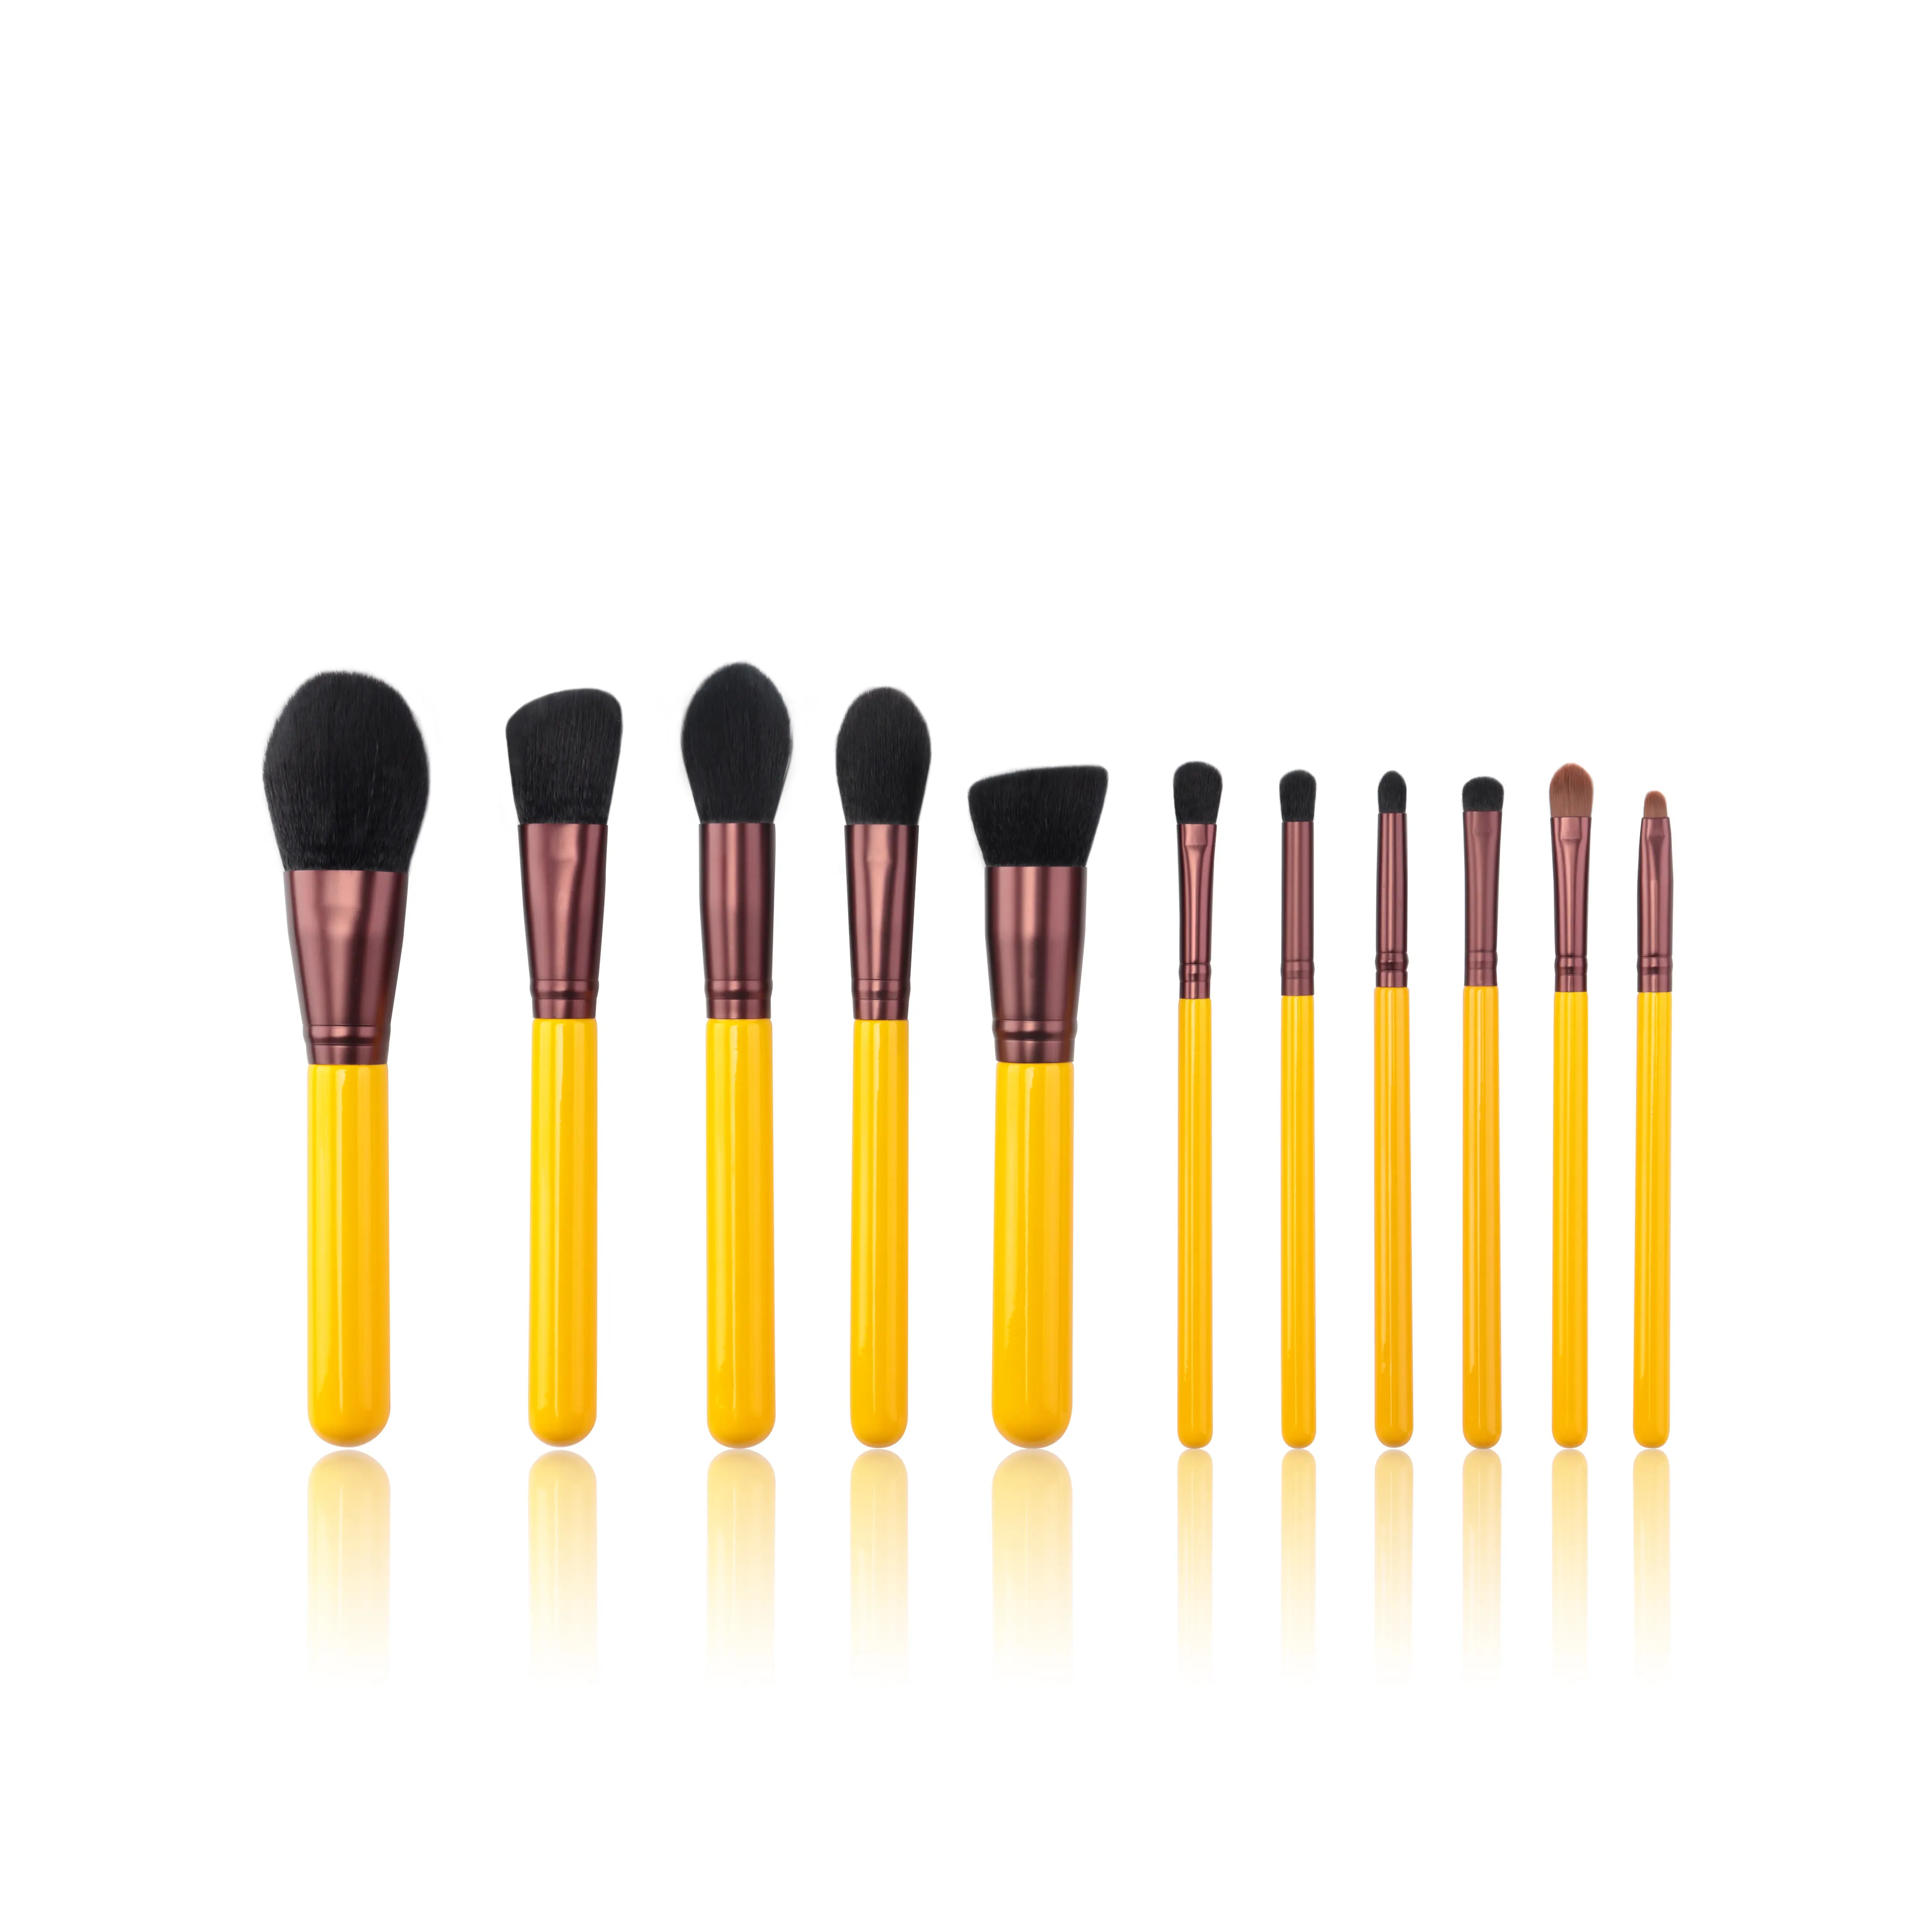 New Facial beauty tools application popular yellow luxury makeup brush full set